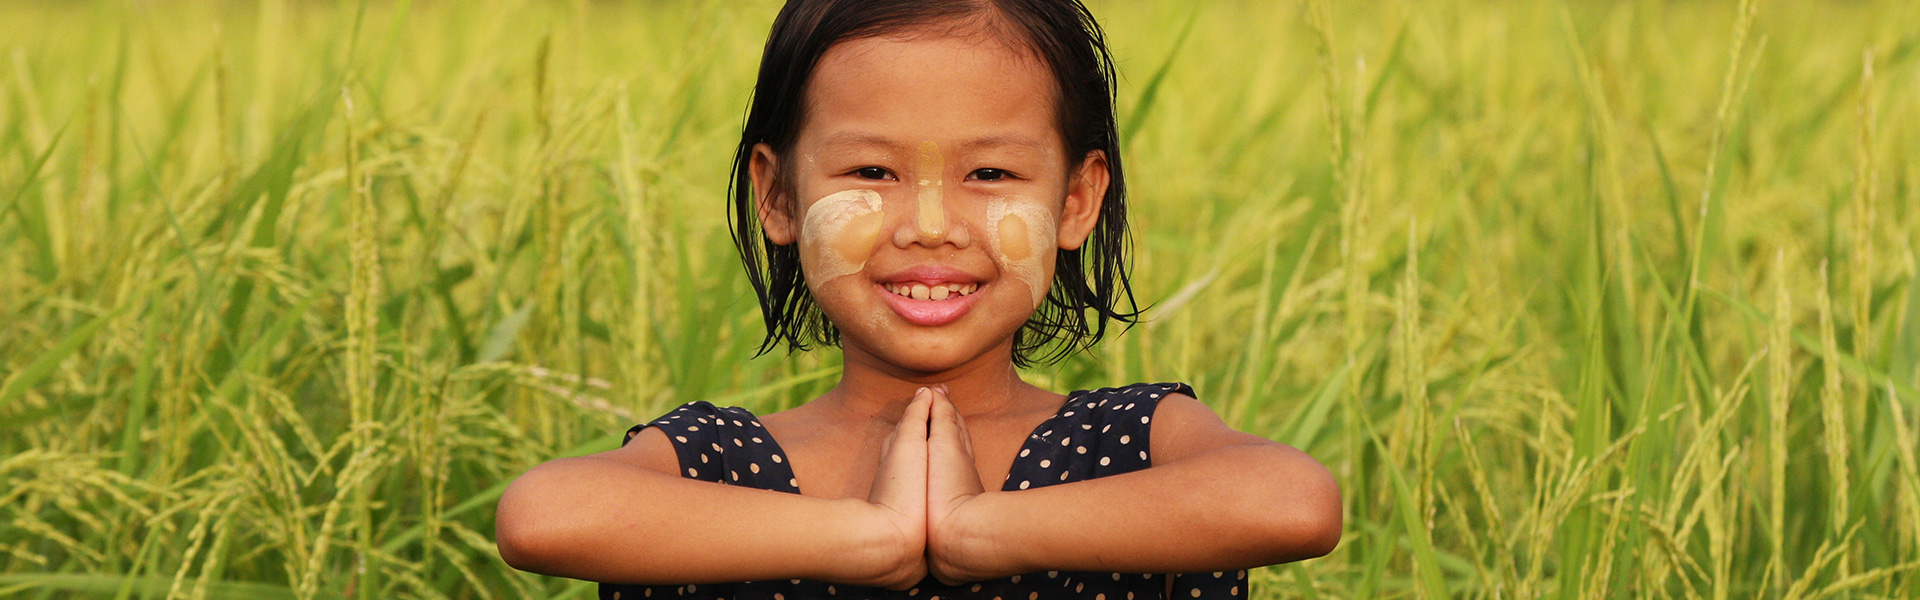 myanmar-girl-smiling-in-the-green-field